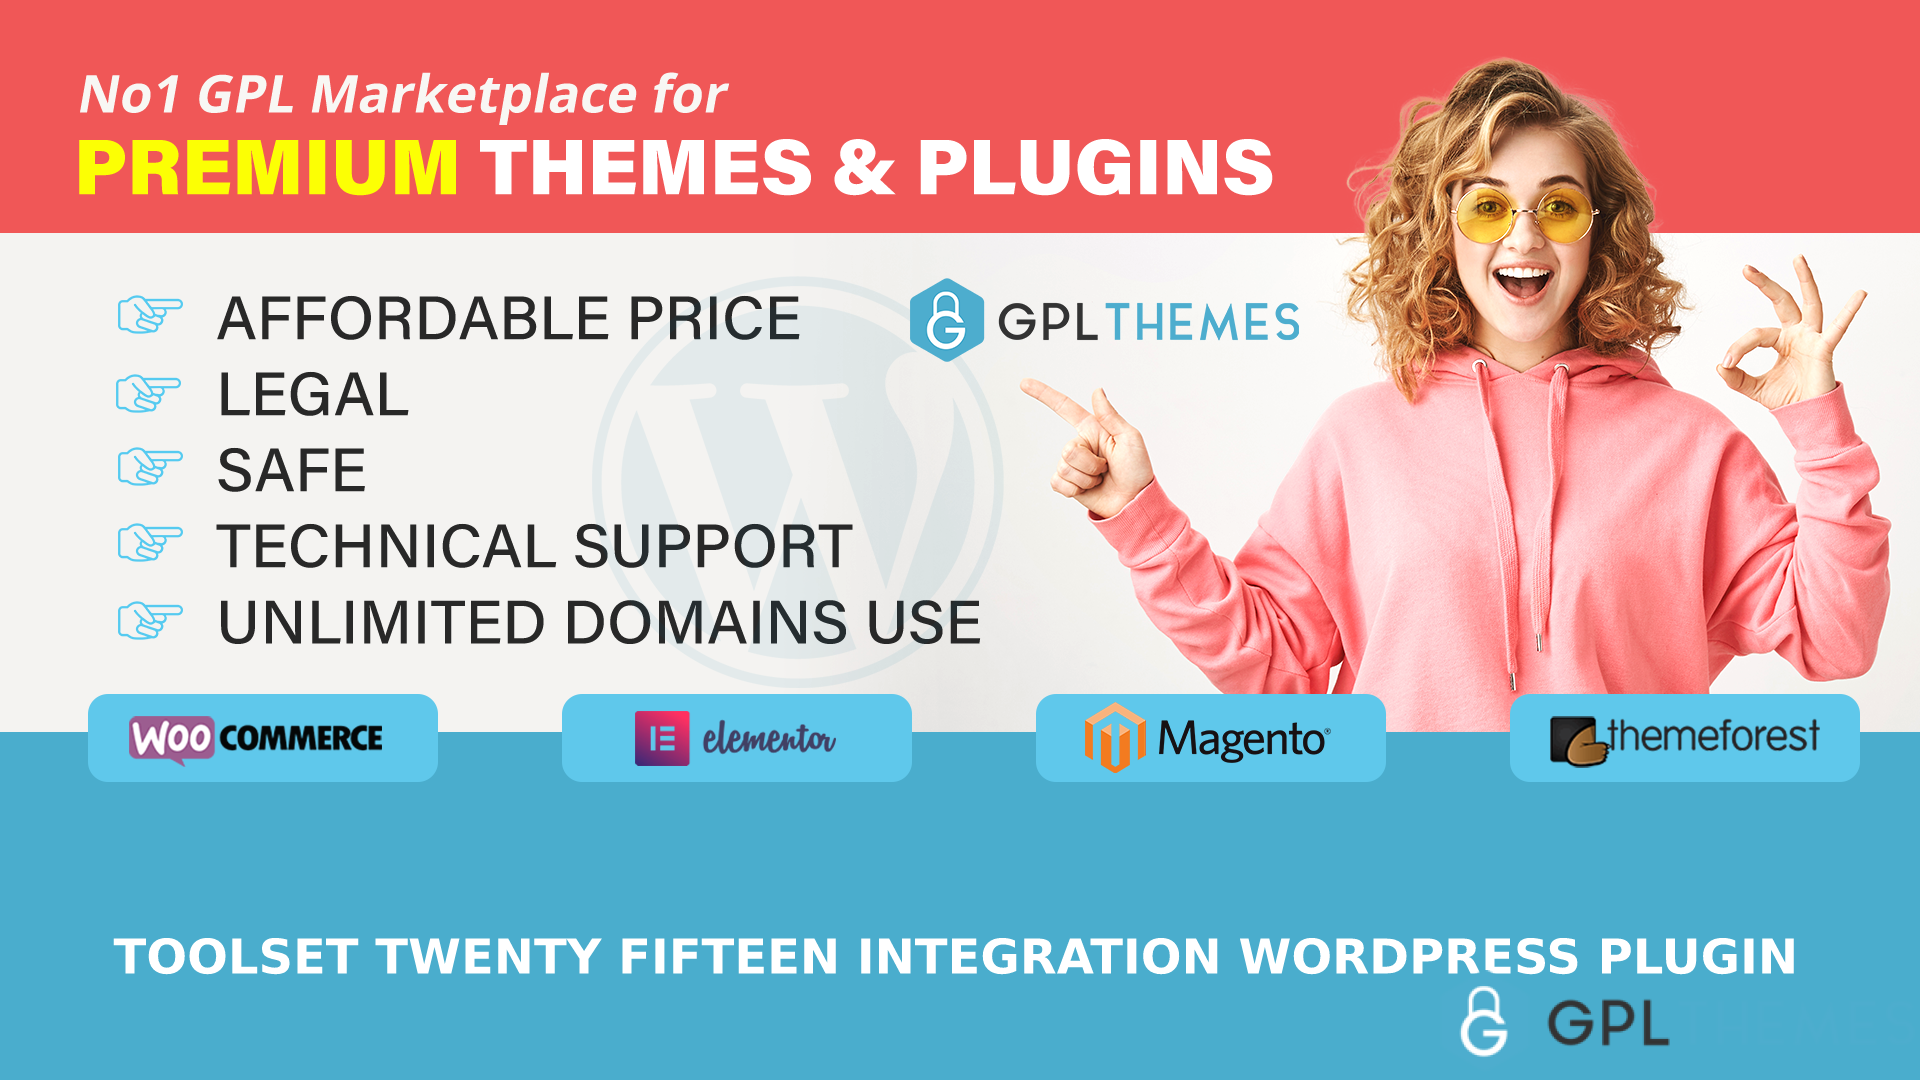 Toolset Twenty Fifteen Integration WordPress Plugin